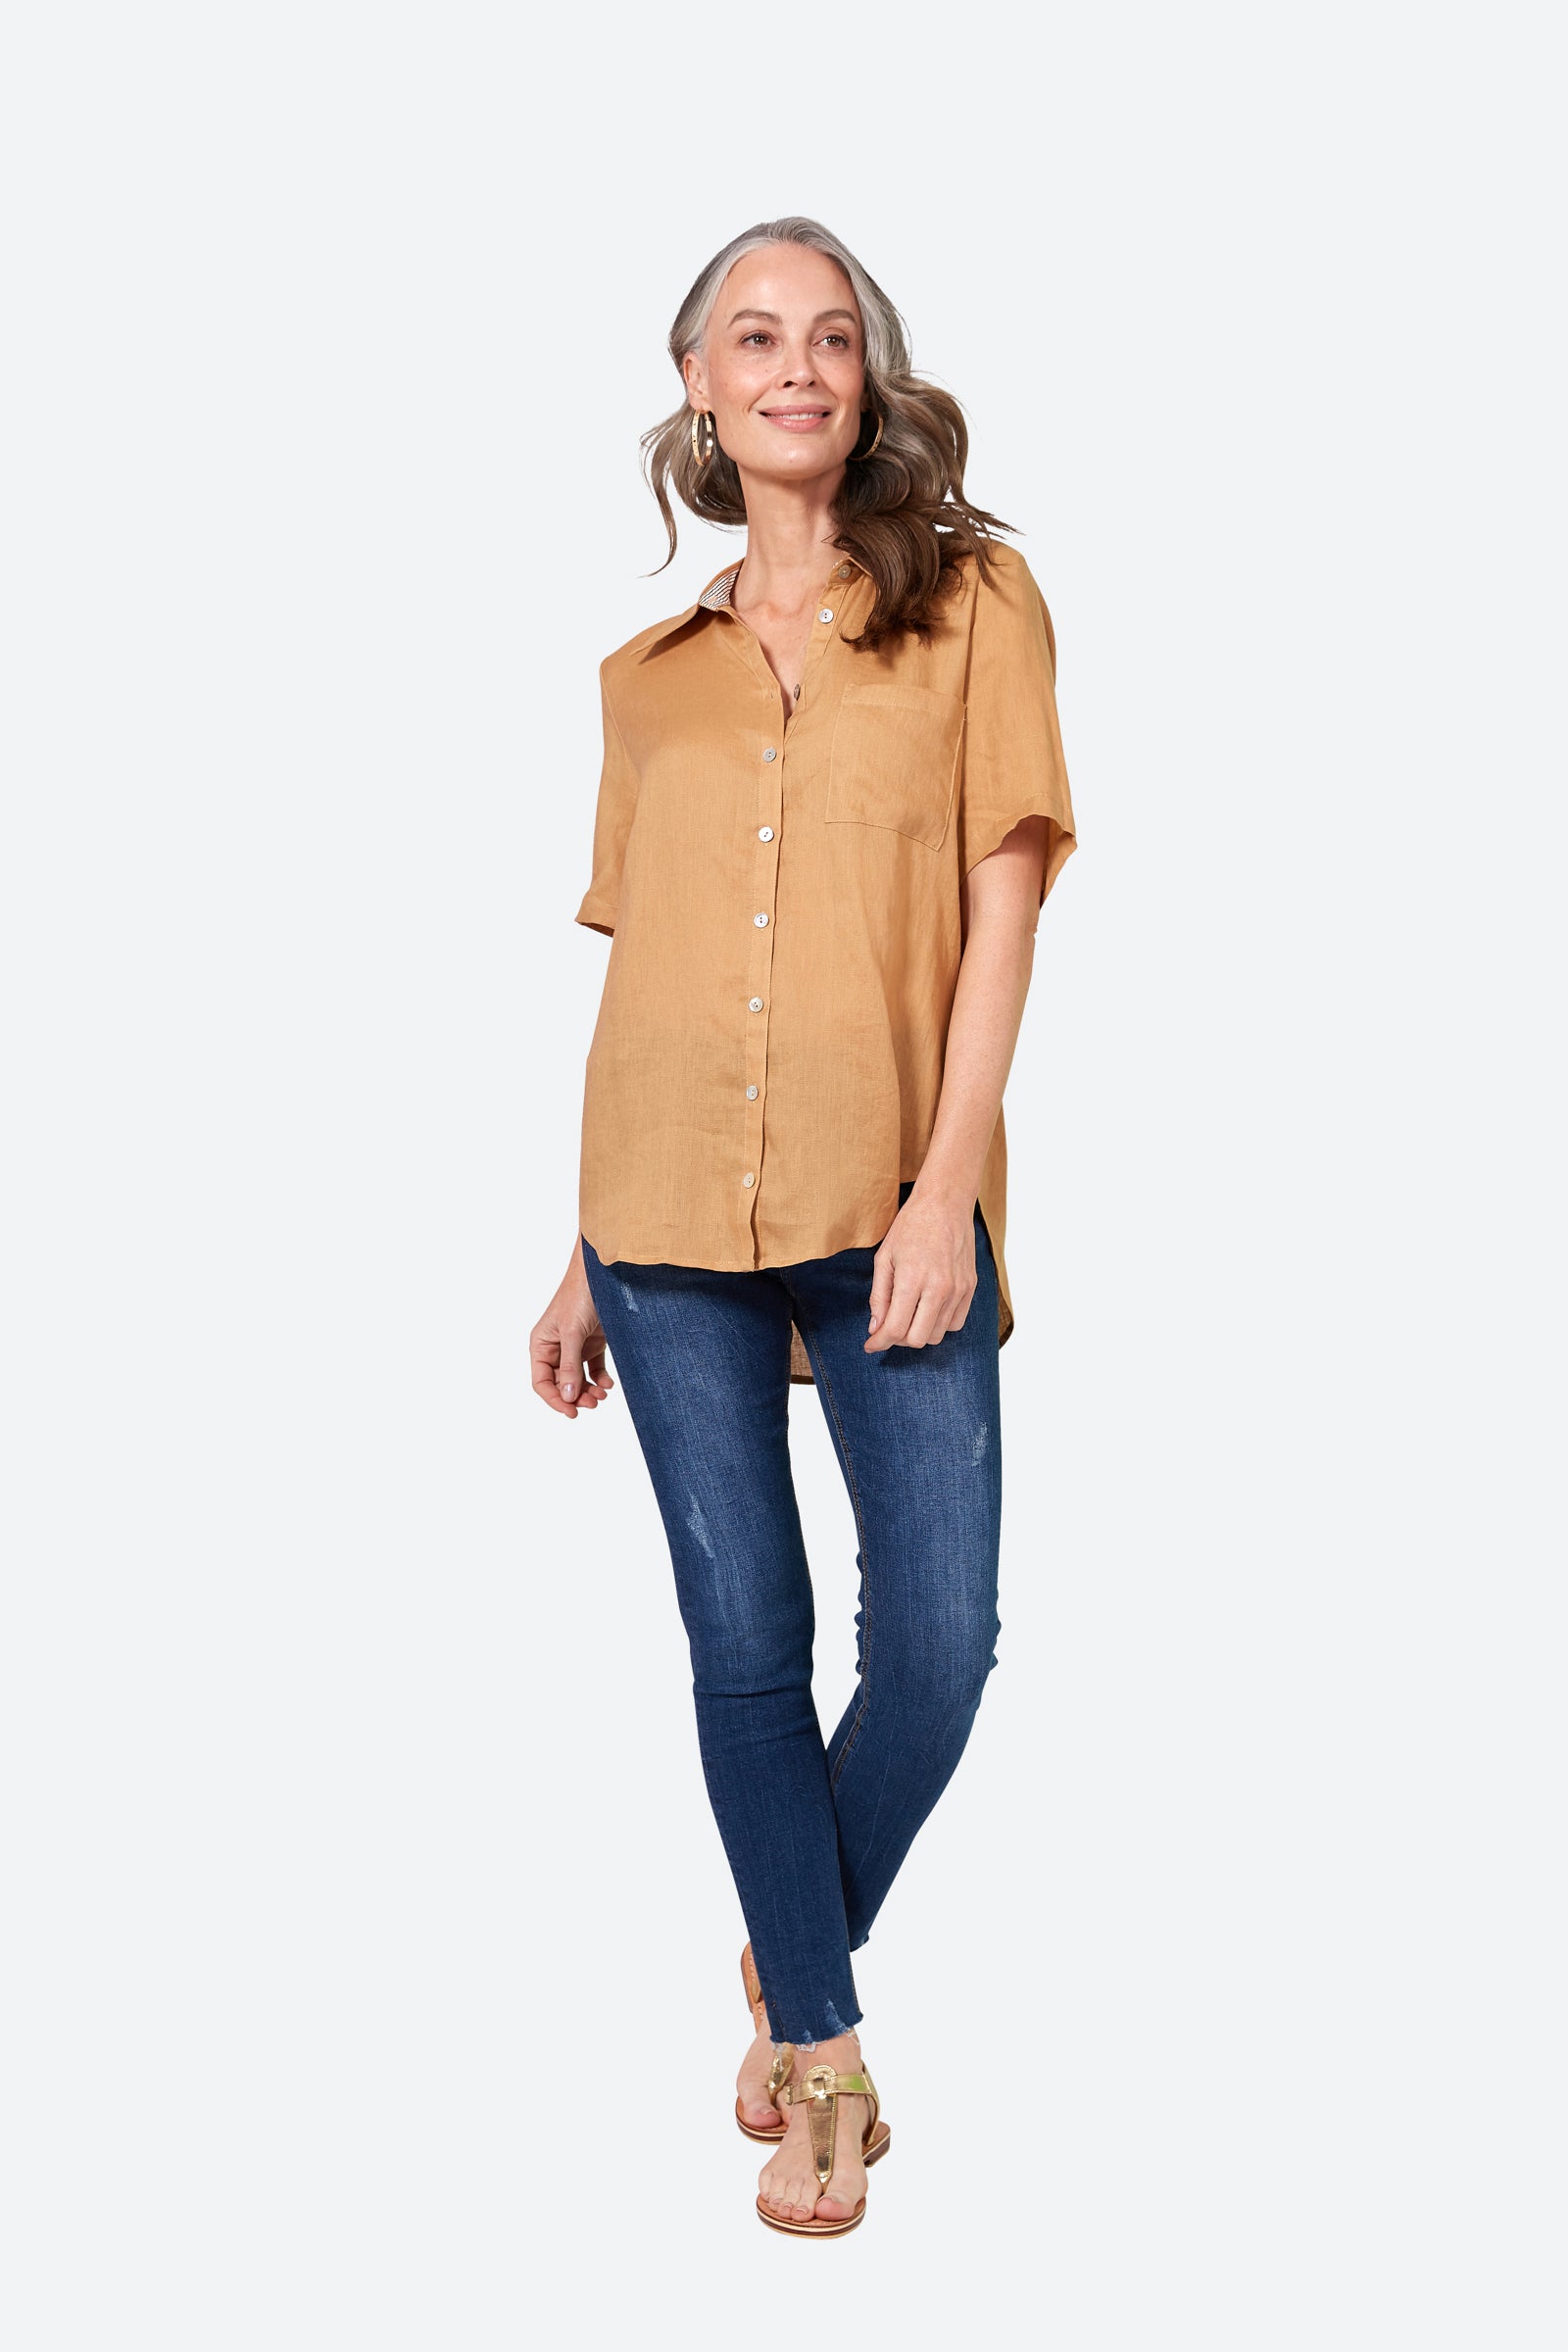 La Vie Shirt - Caramel - eb&ive Clothing - Shirt S/S Linen